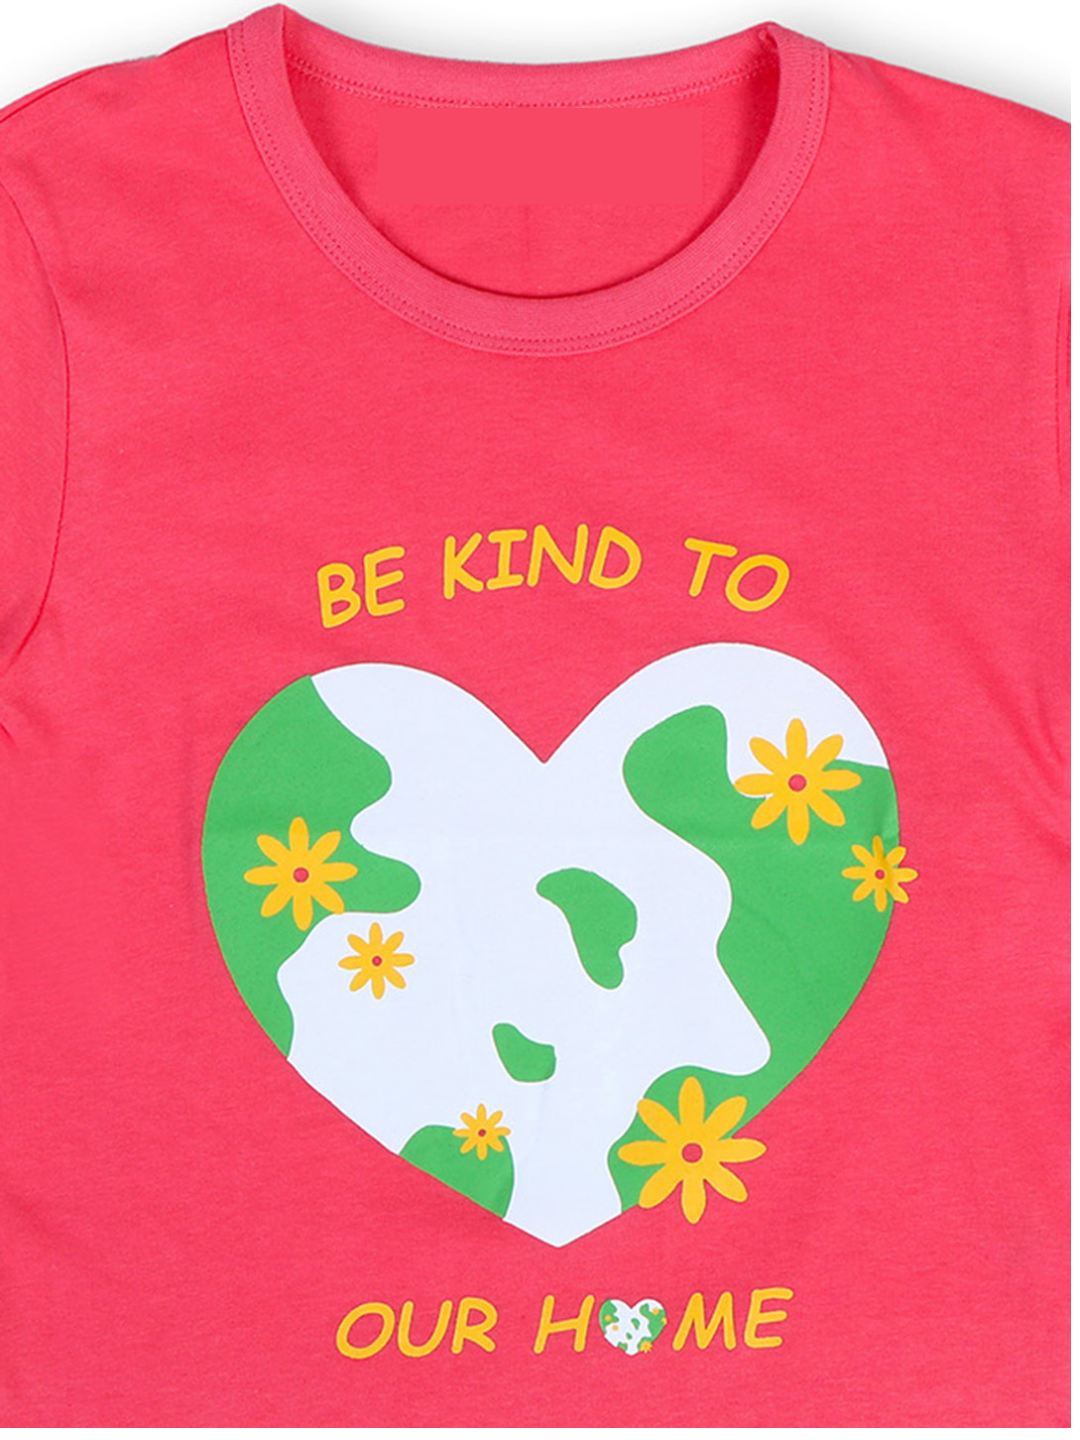 TWGE - Kids Tshirt for Girls - Printed Regular Fit Tees - Color Baby Pink